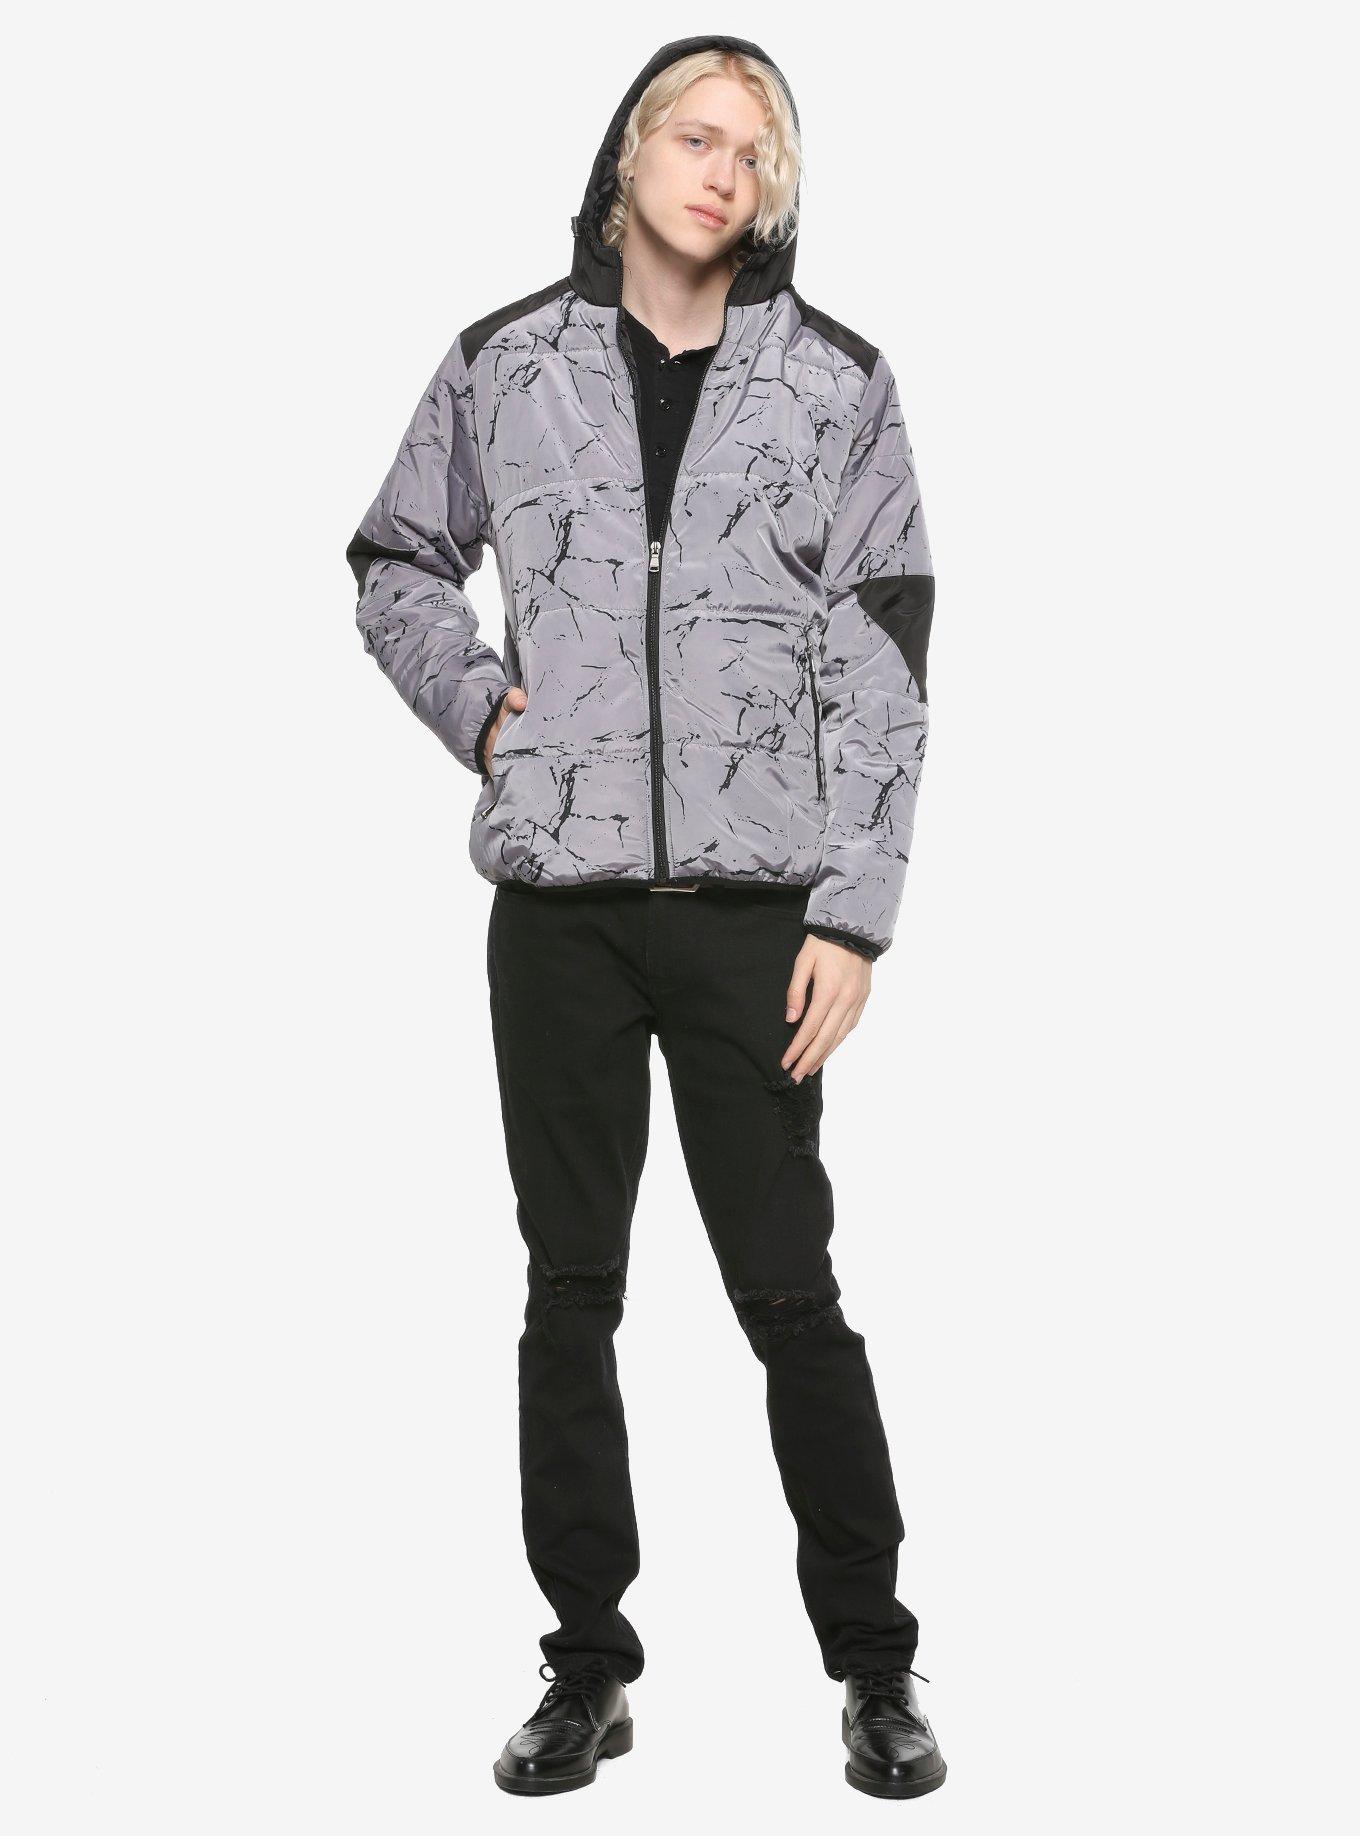 Black & Grey Reflective Puffer Jacket, GREY, alternate